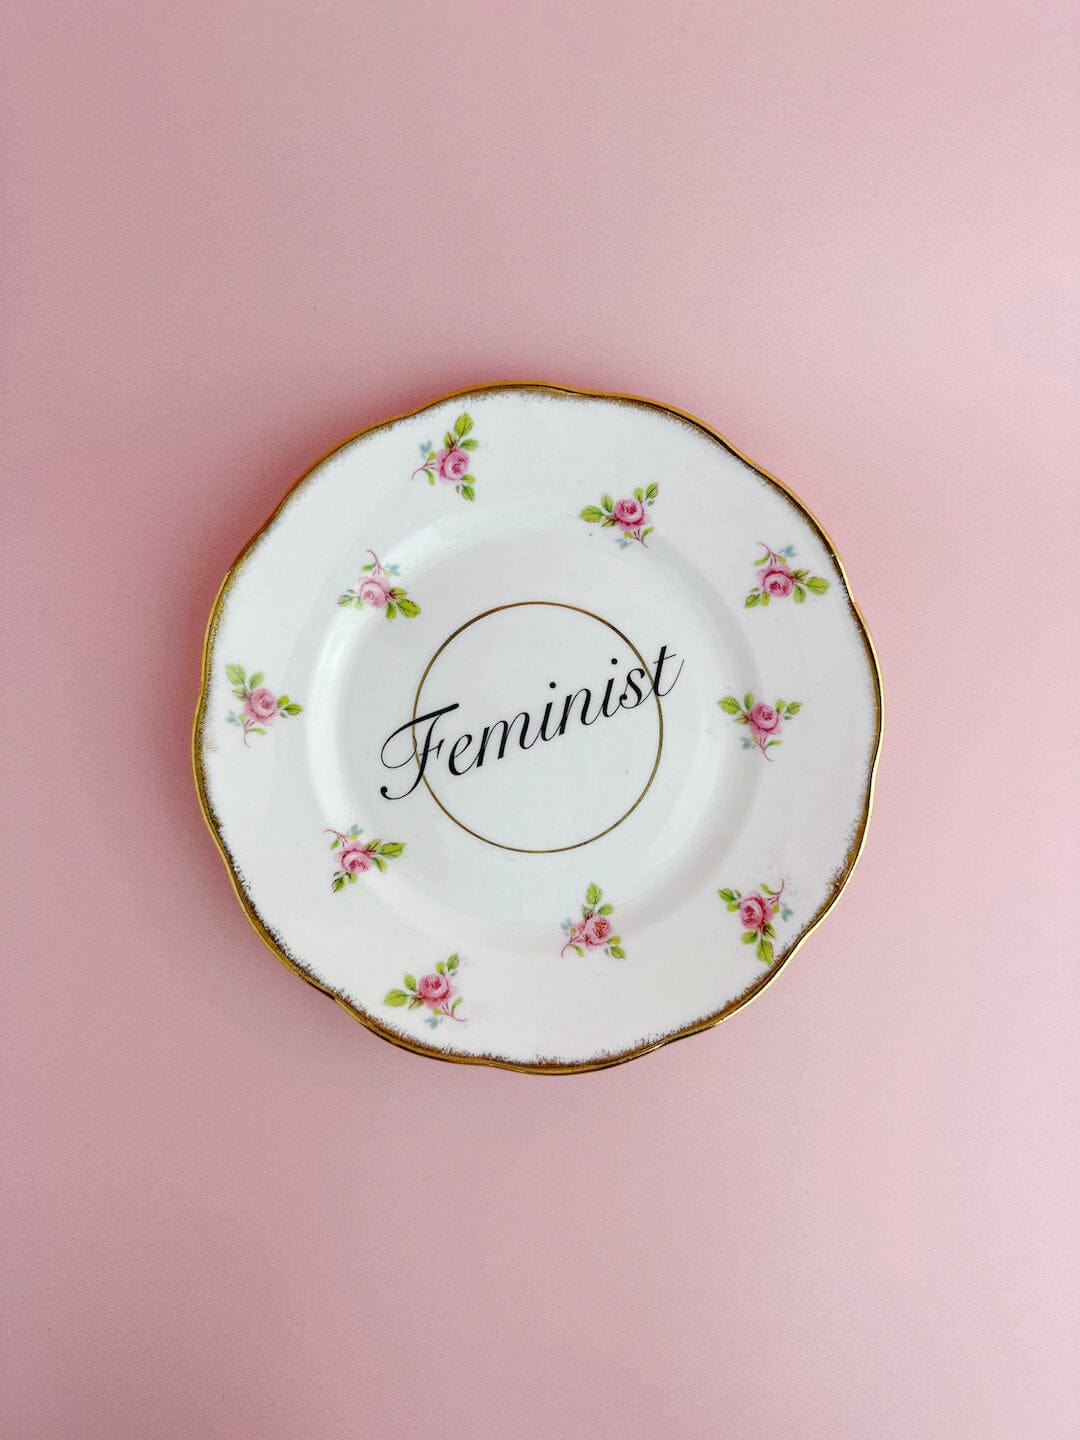 Beau & Badger Ceramics #98 Decorative Wall Plate - Feminist (multiple designs)